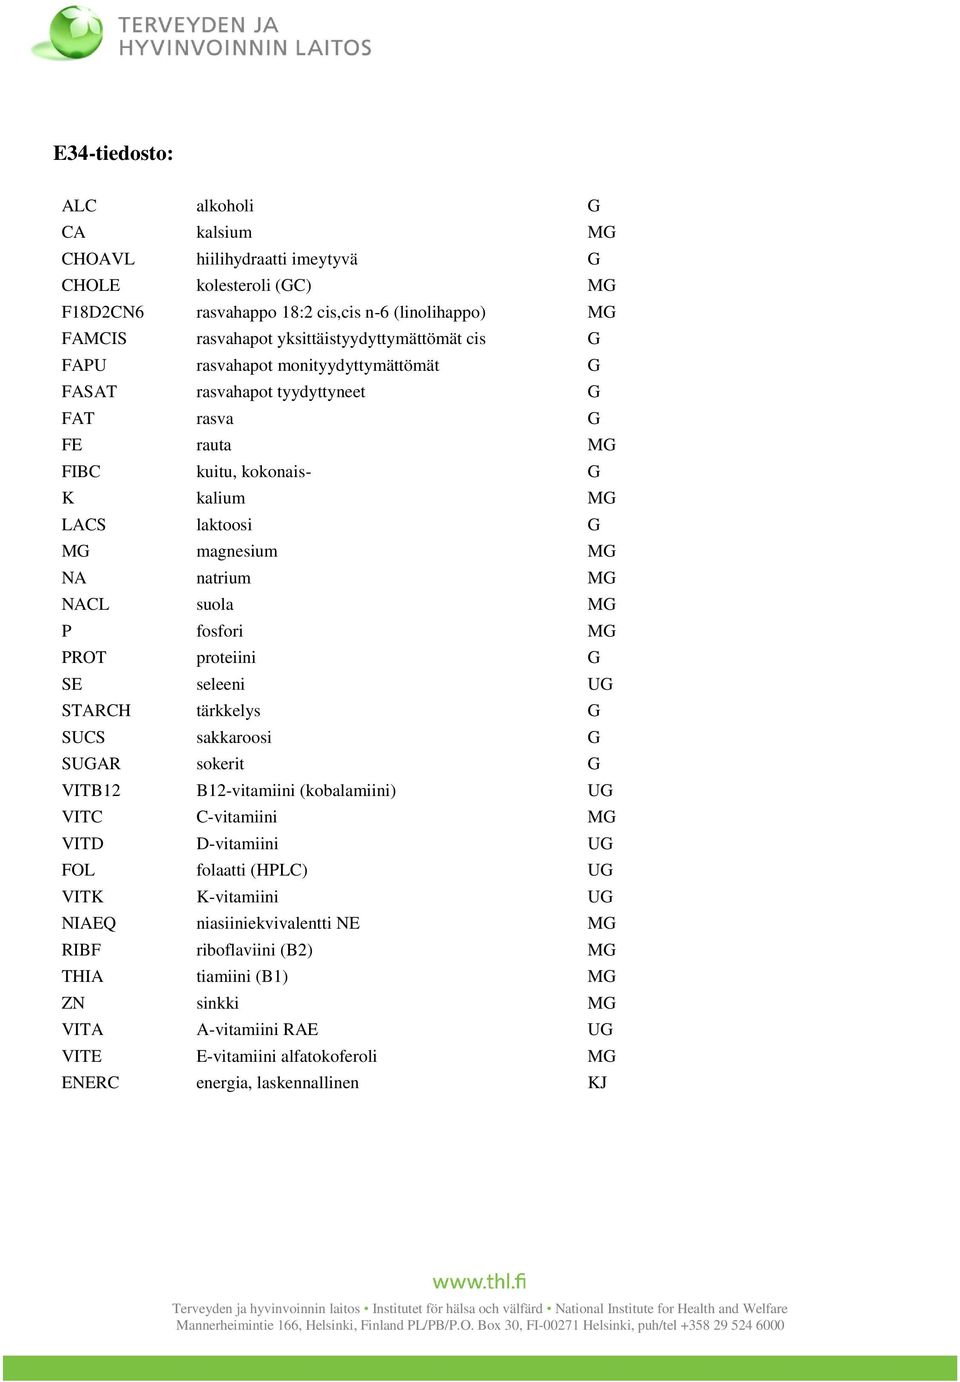 MG P fosfori MG SE seleeni UG SUCS sakkaroosi G VITB12 B12-vitamiini (kobalamiini)